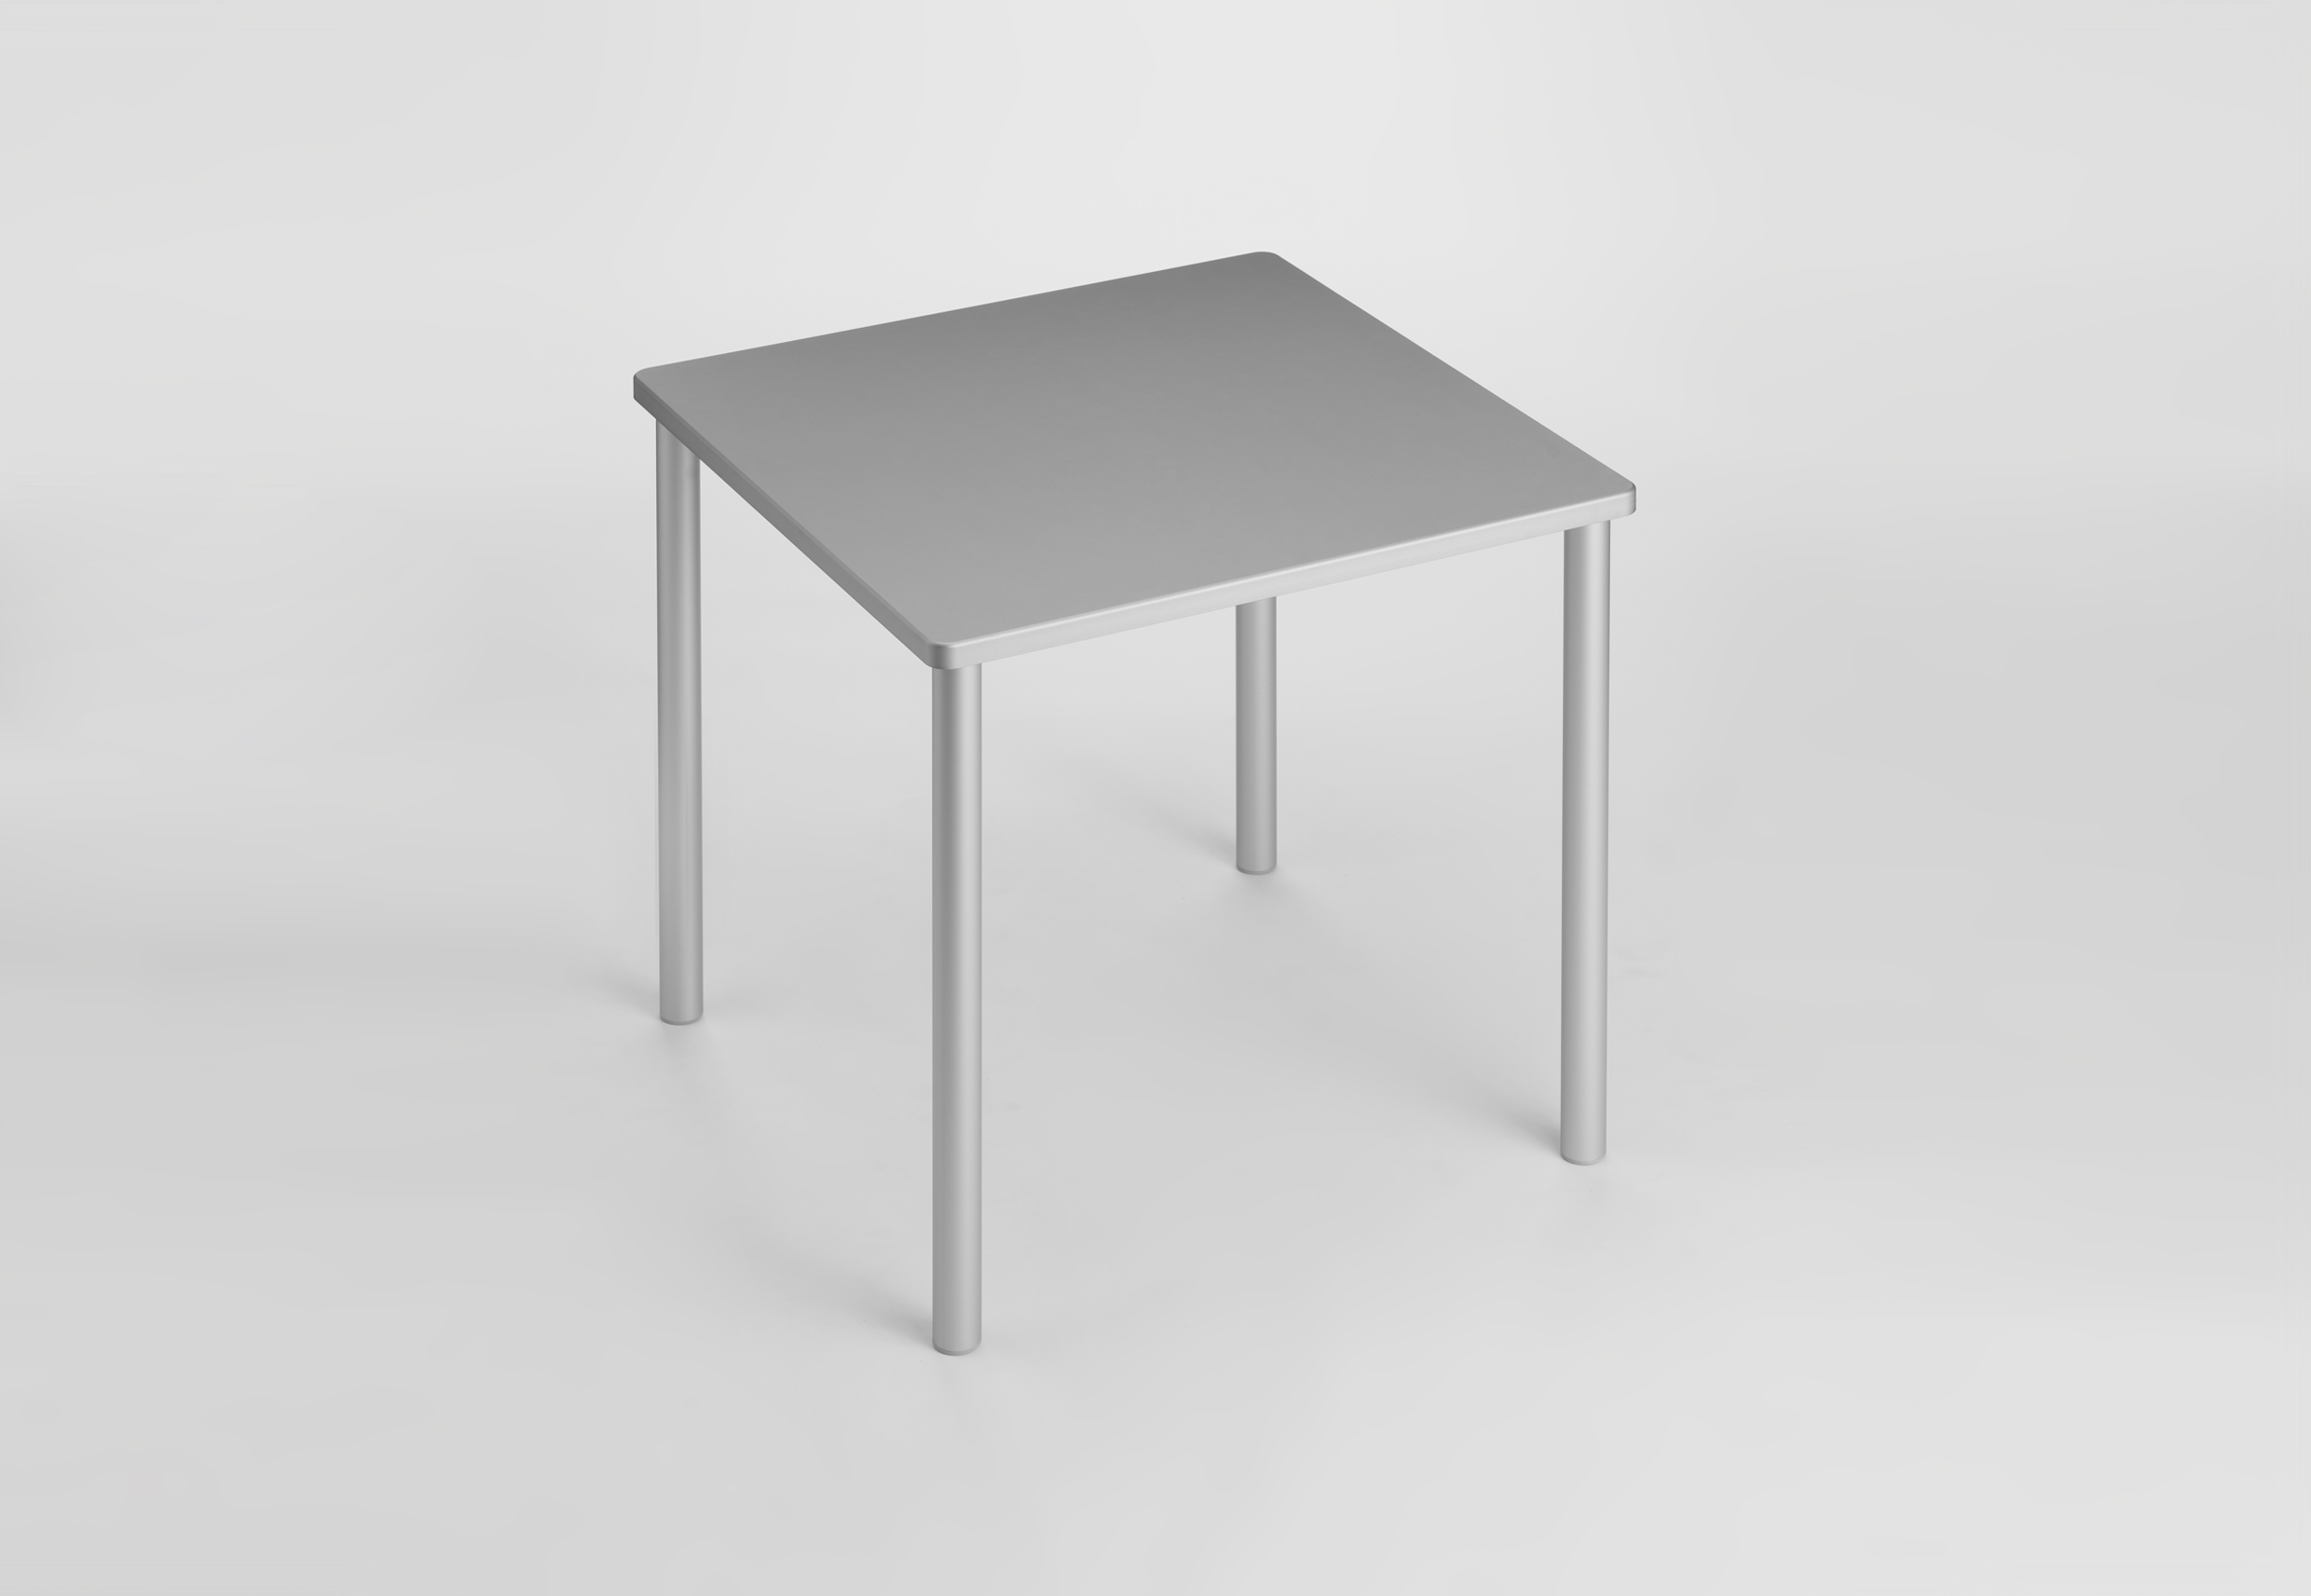 Minimalist Table "Una" by Mario Martinez